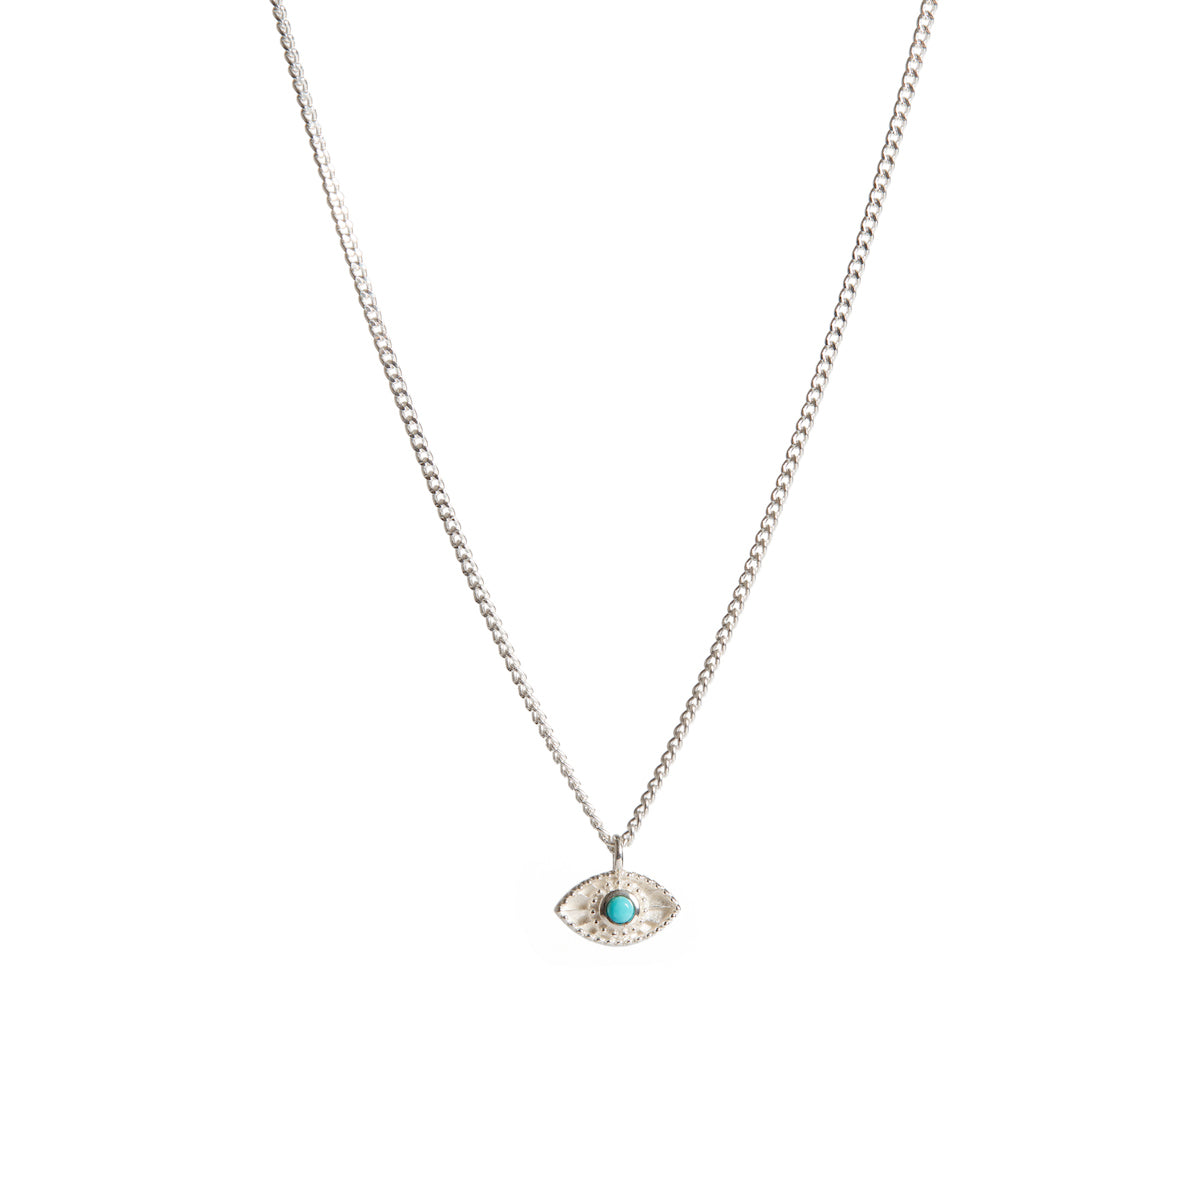 rachel-entwistle-mini-rays-of-light-necklace-turquoise-silver